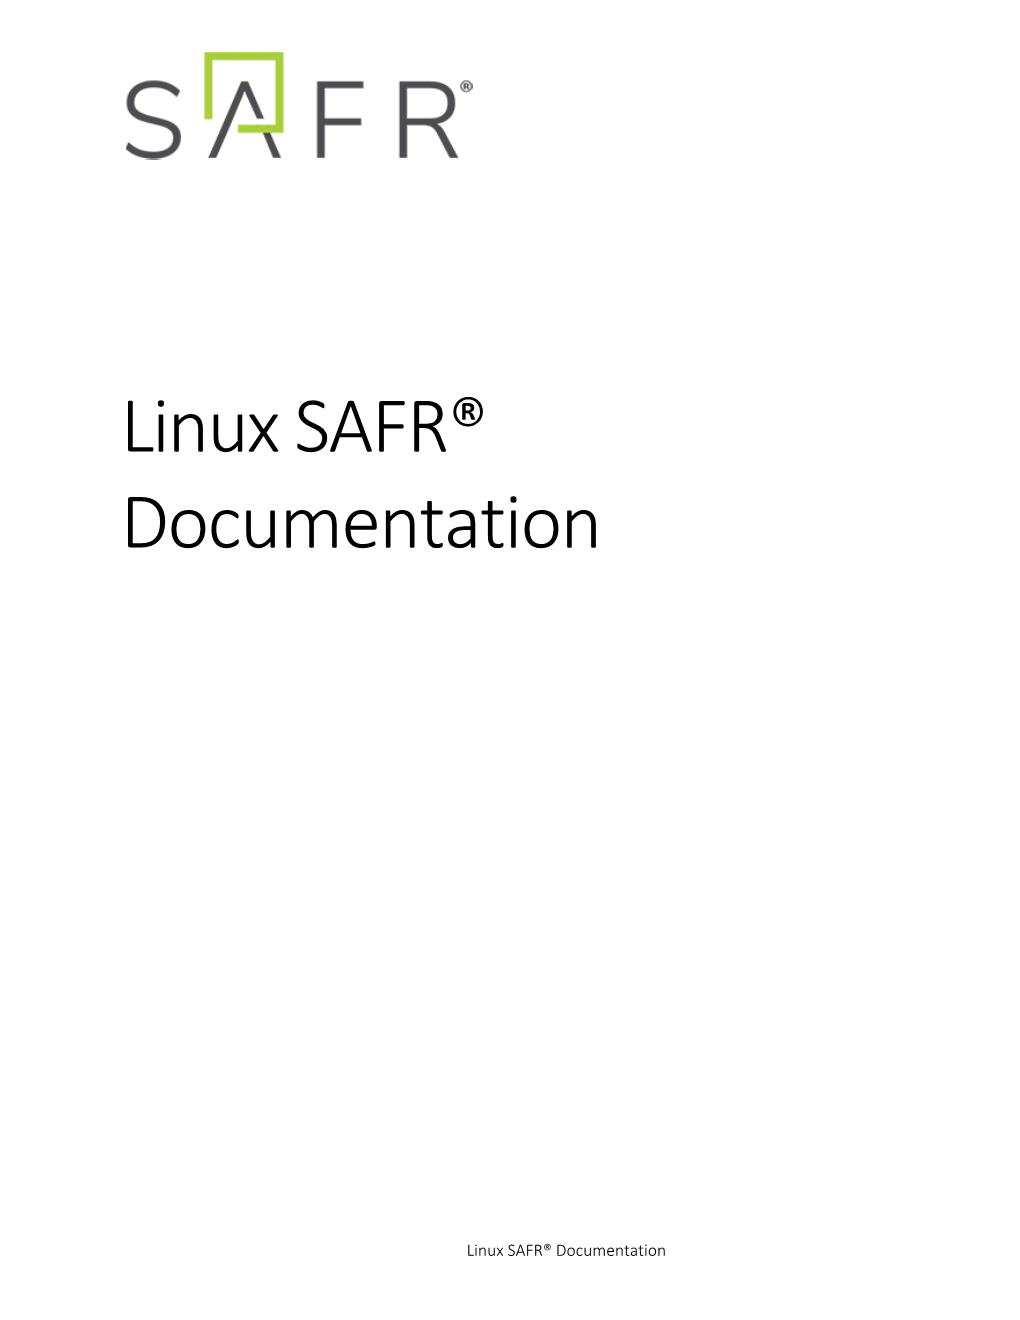 May 12 2020 Linux Documentation